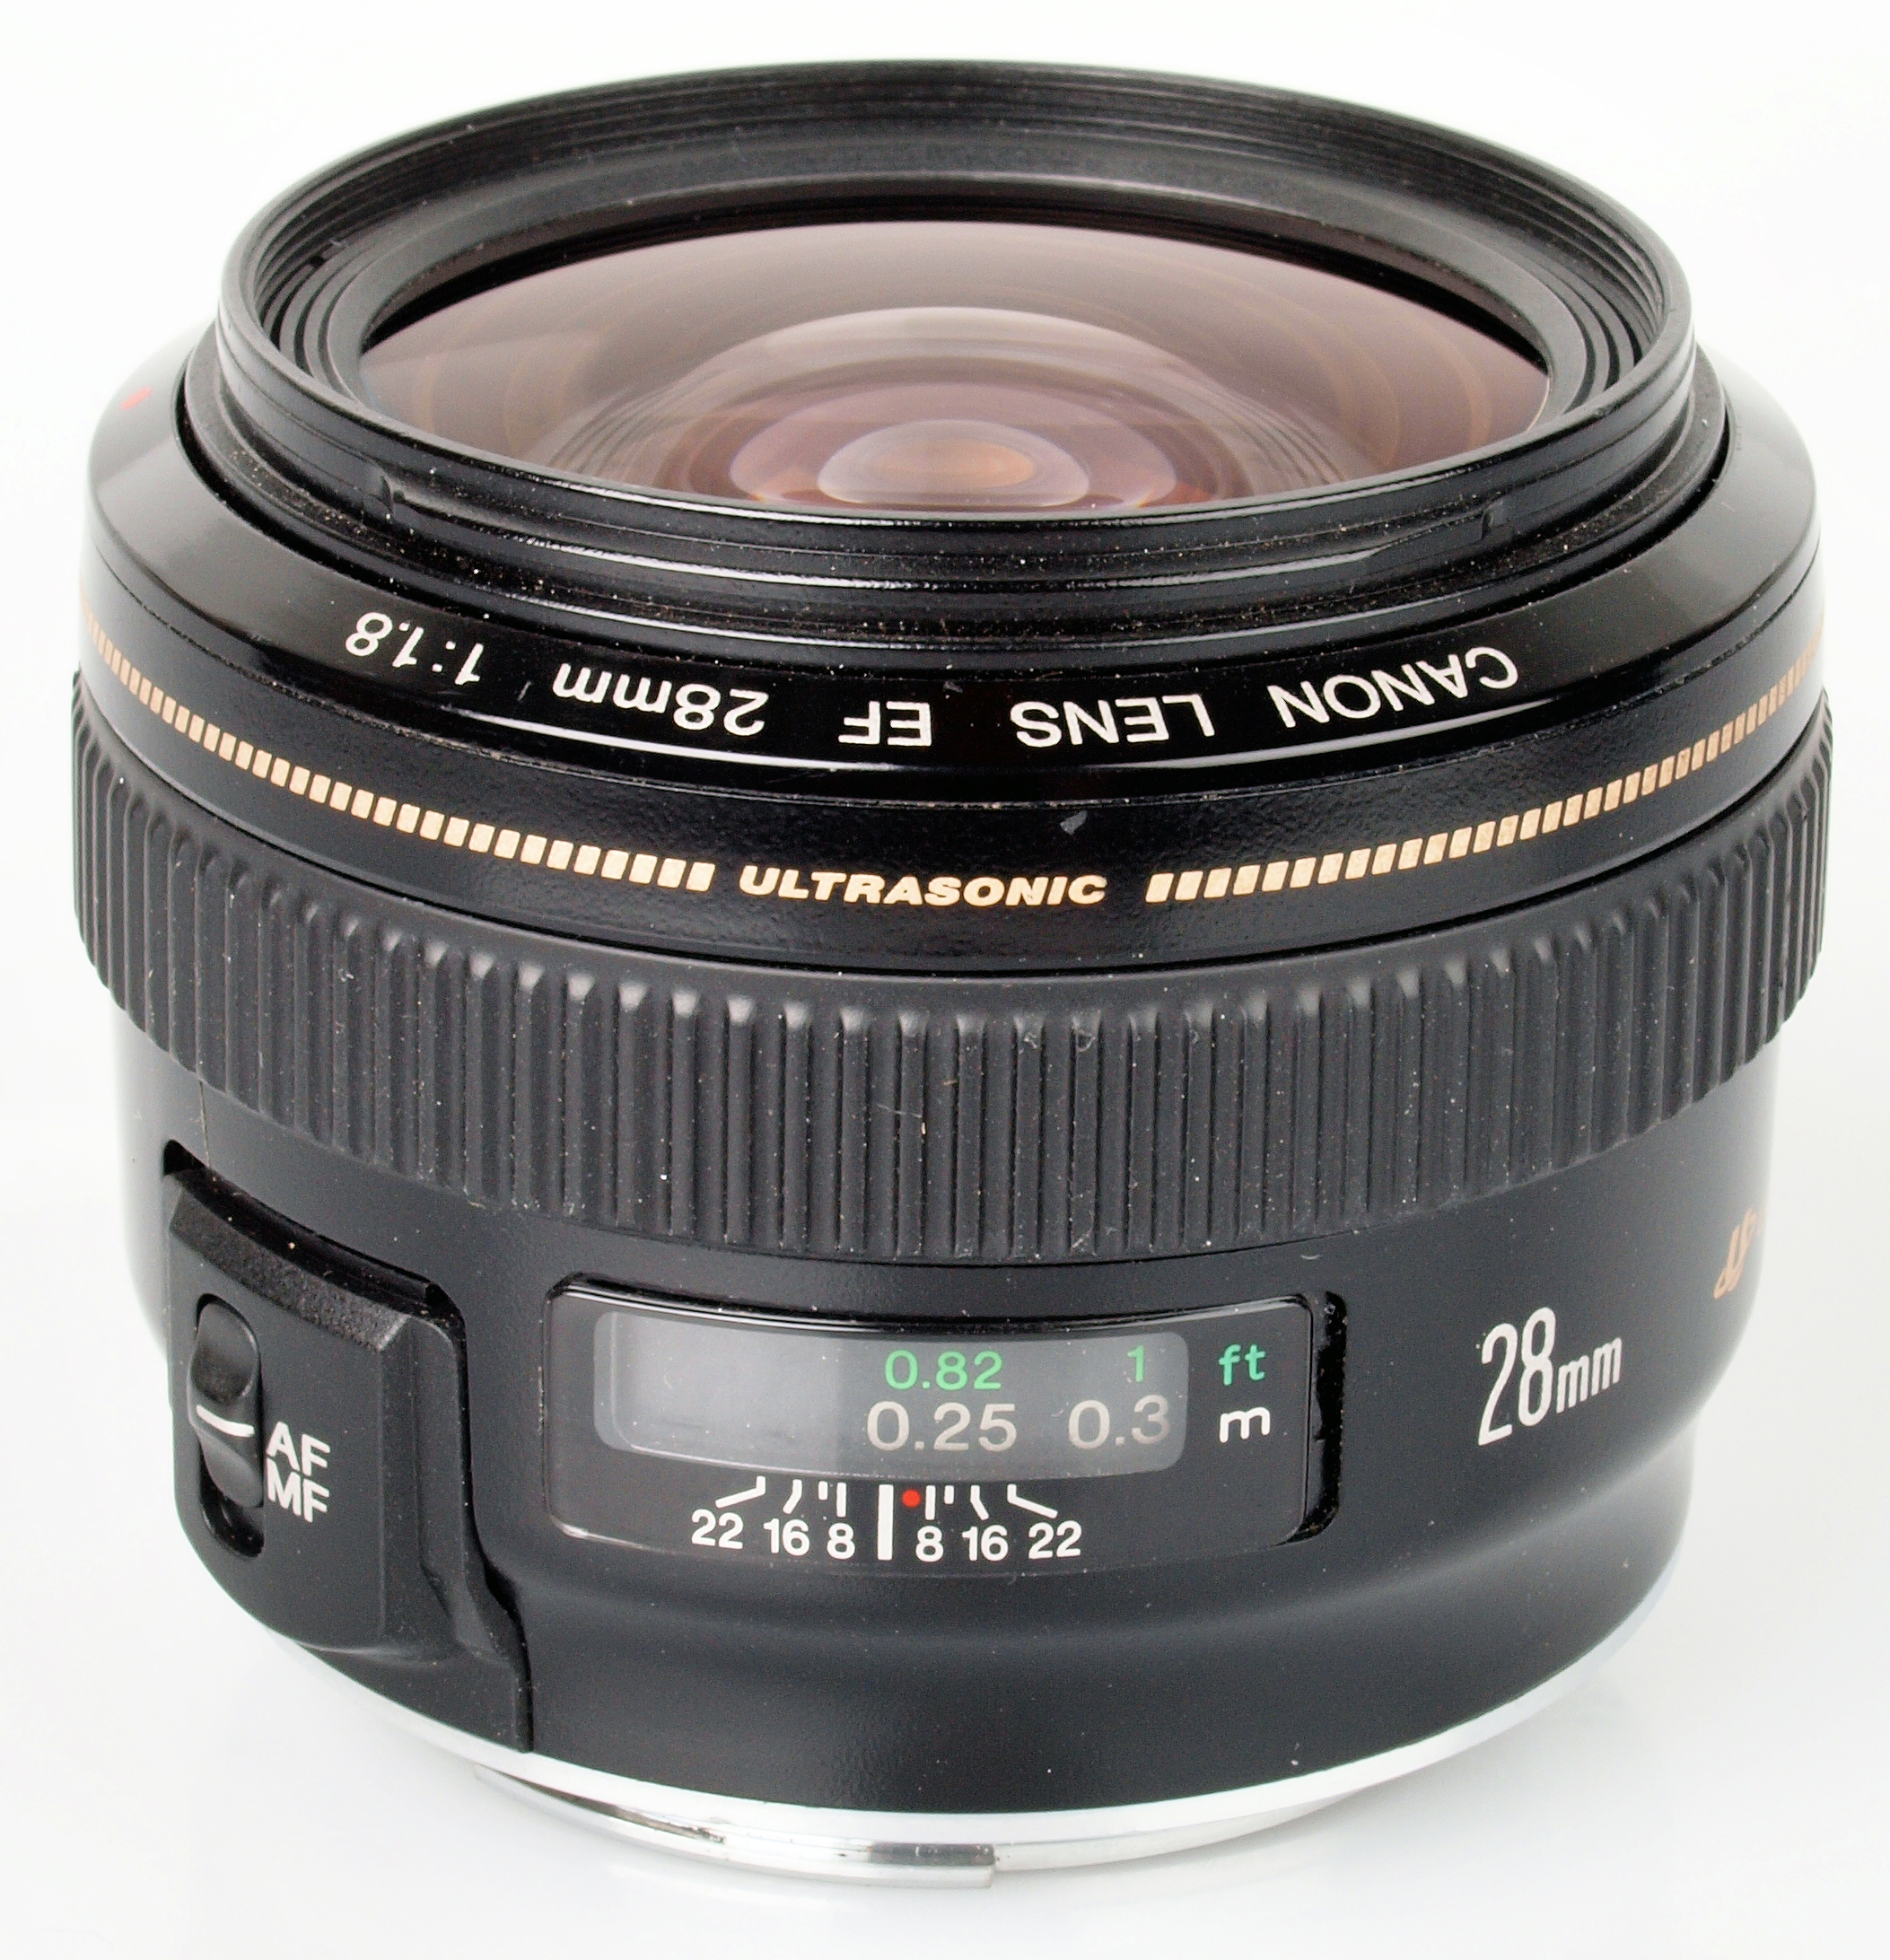 Canon EF 28mm f/1.8 USM Lens Review